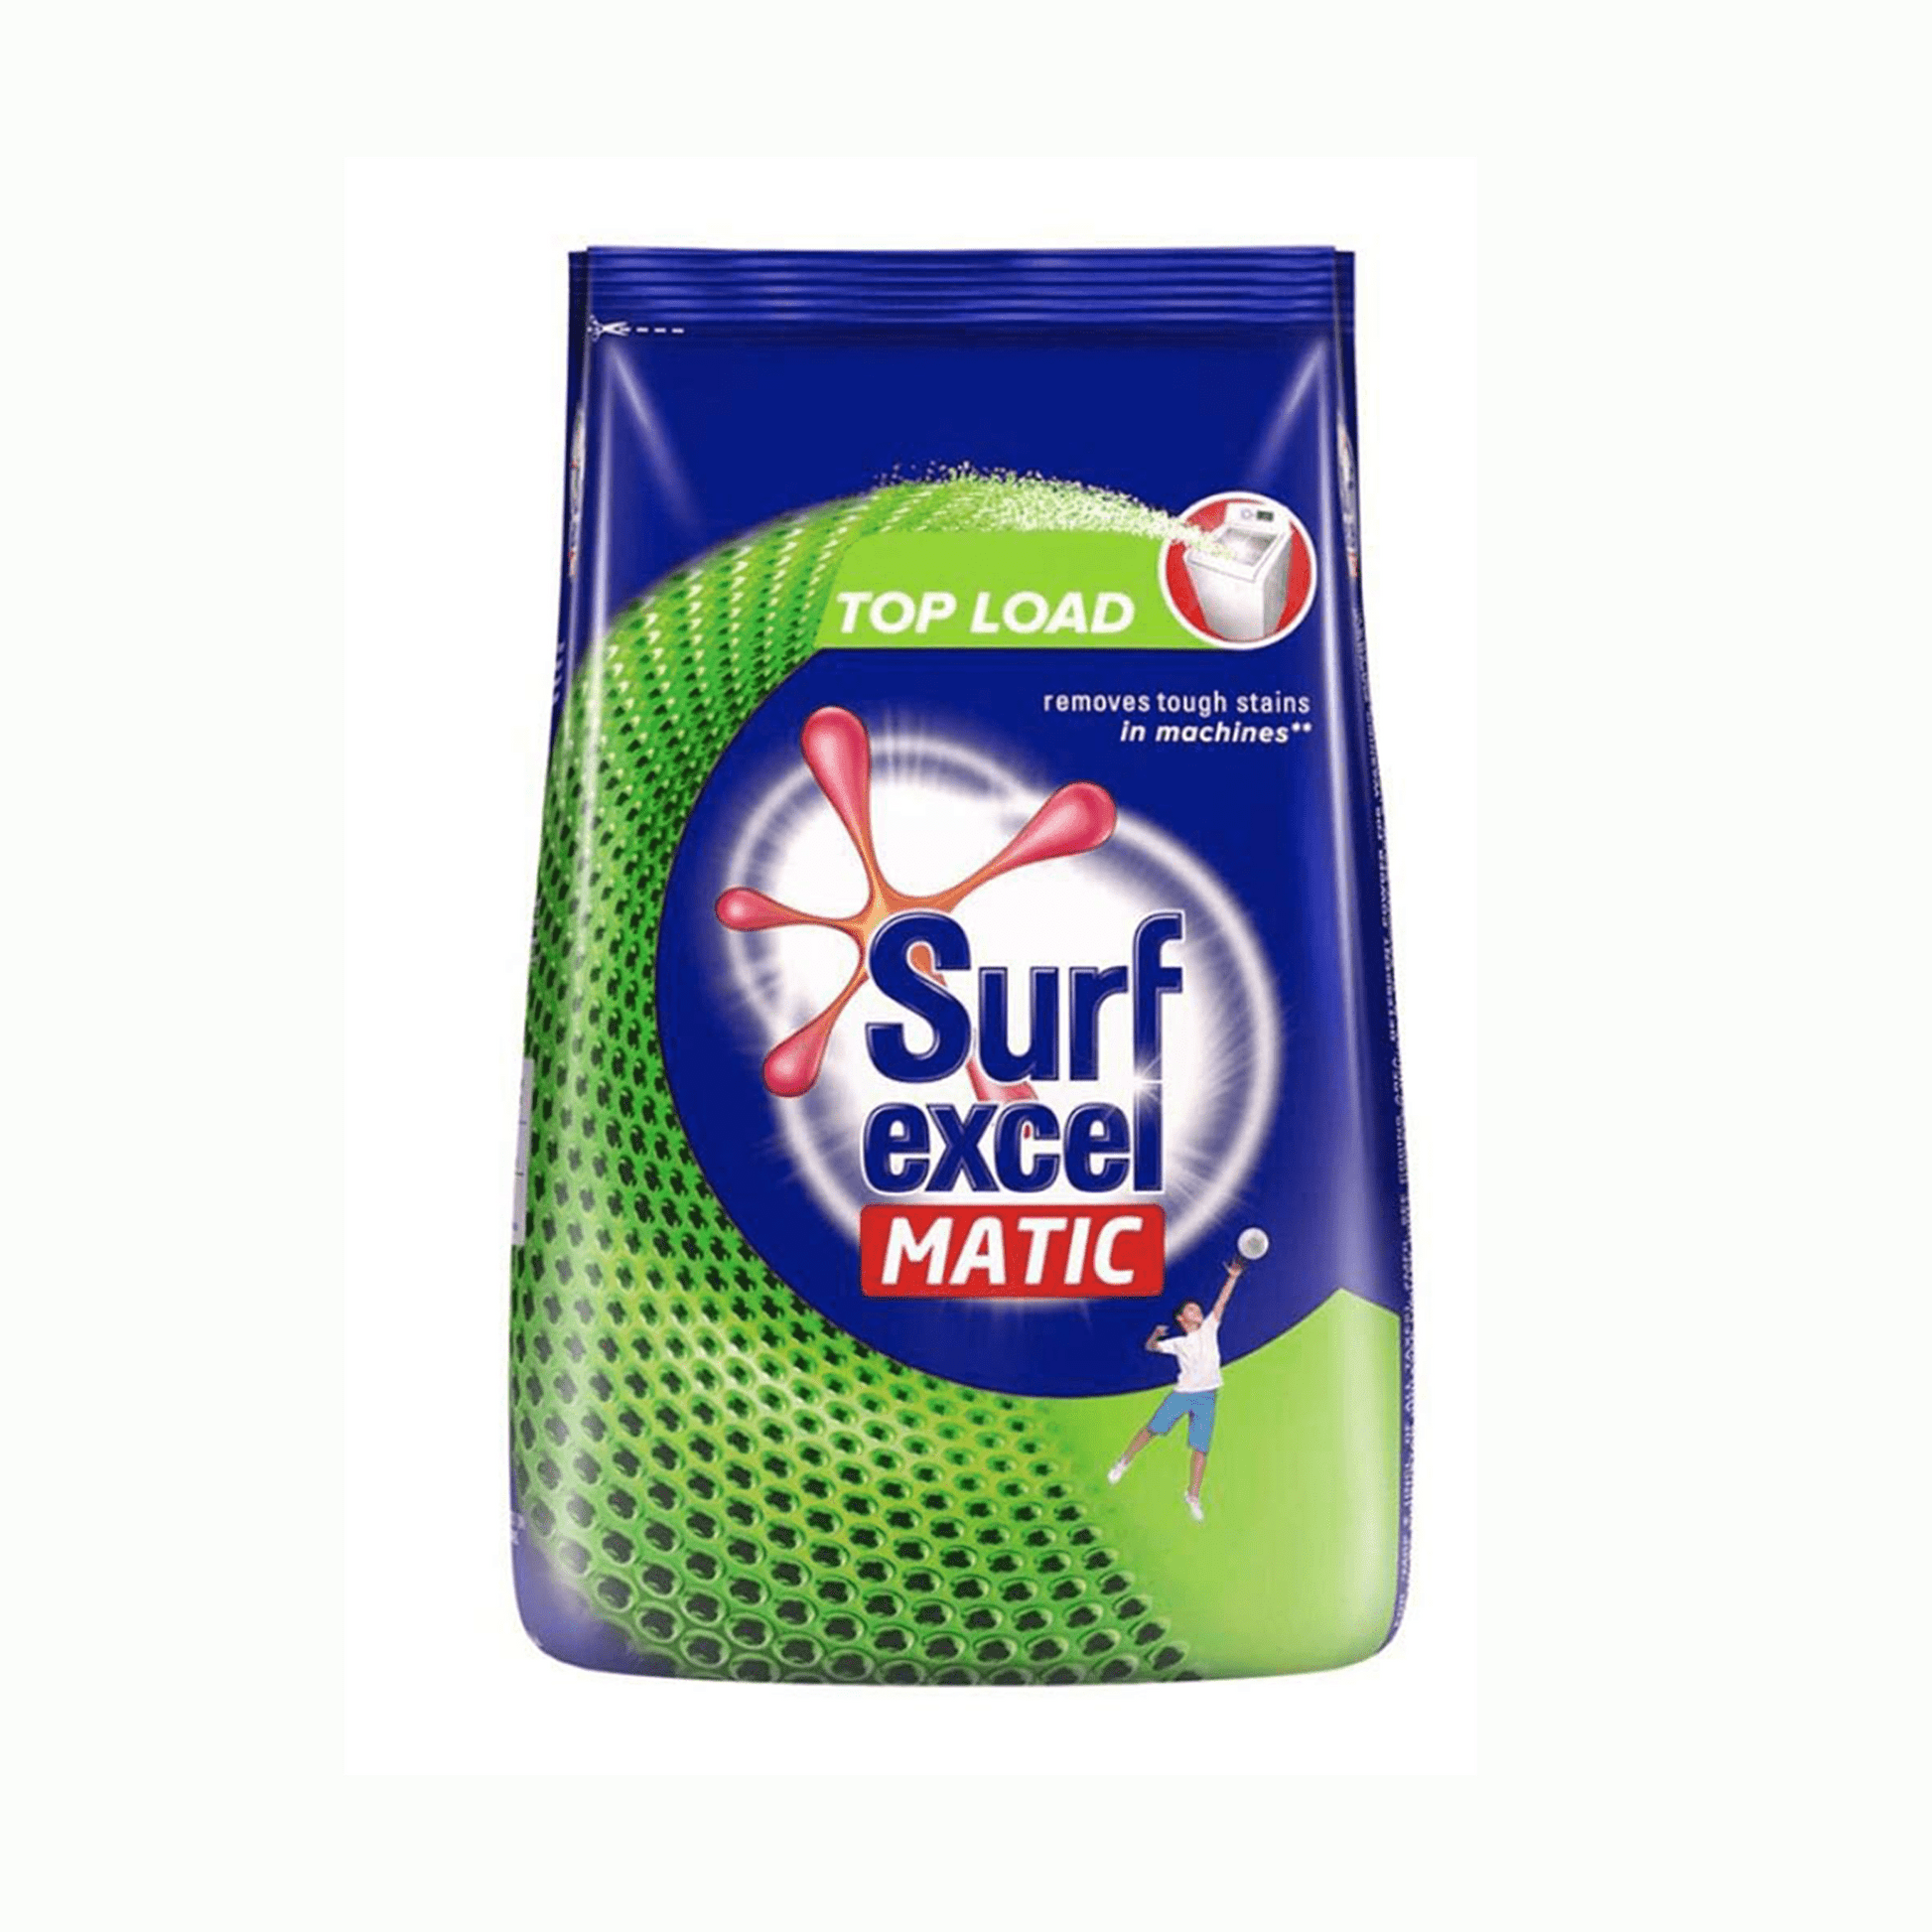 Surfexcel Matic Top Load Detergent Powder.